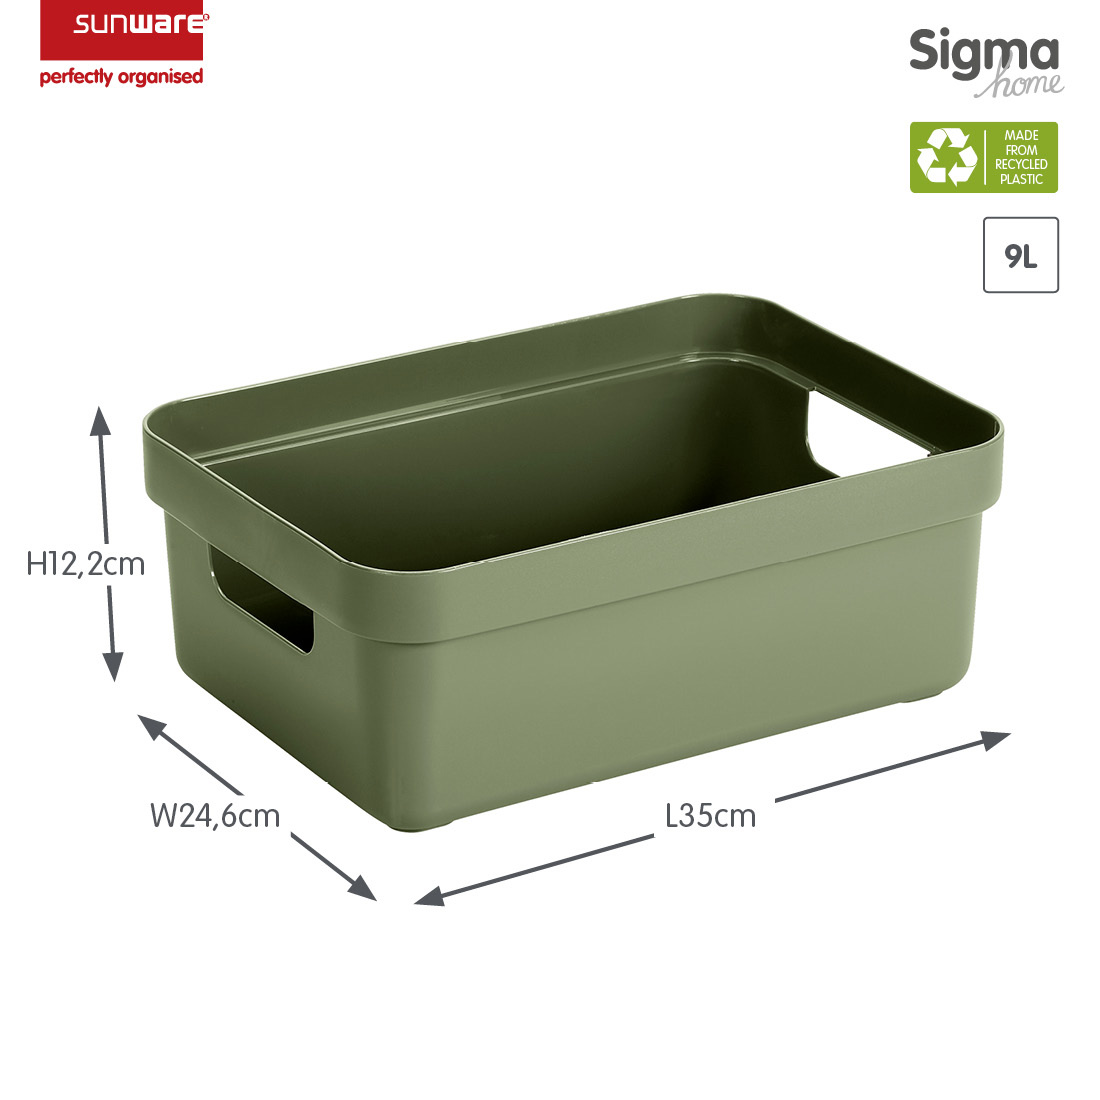 Sigma home storage box 9L dark green